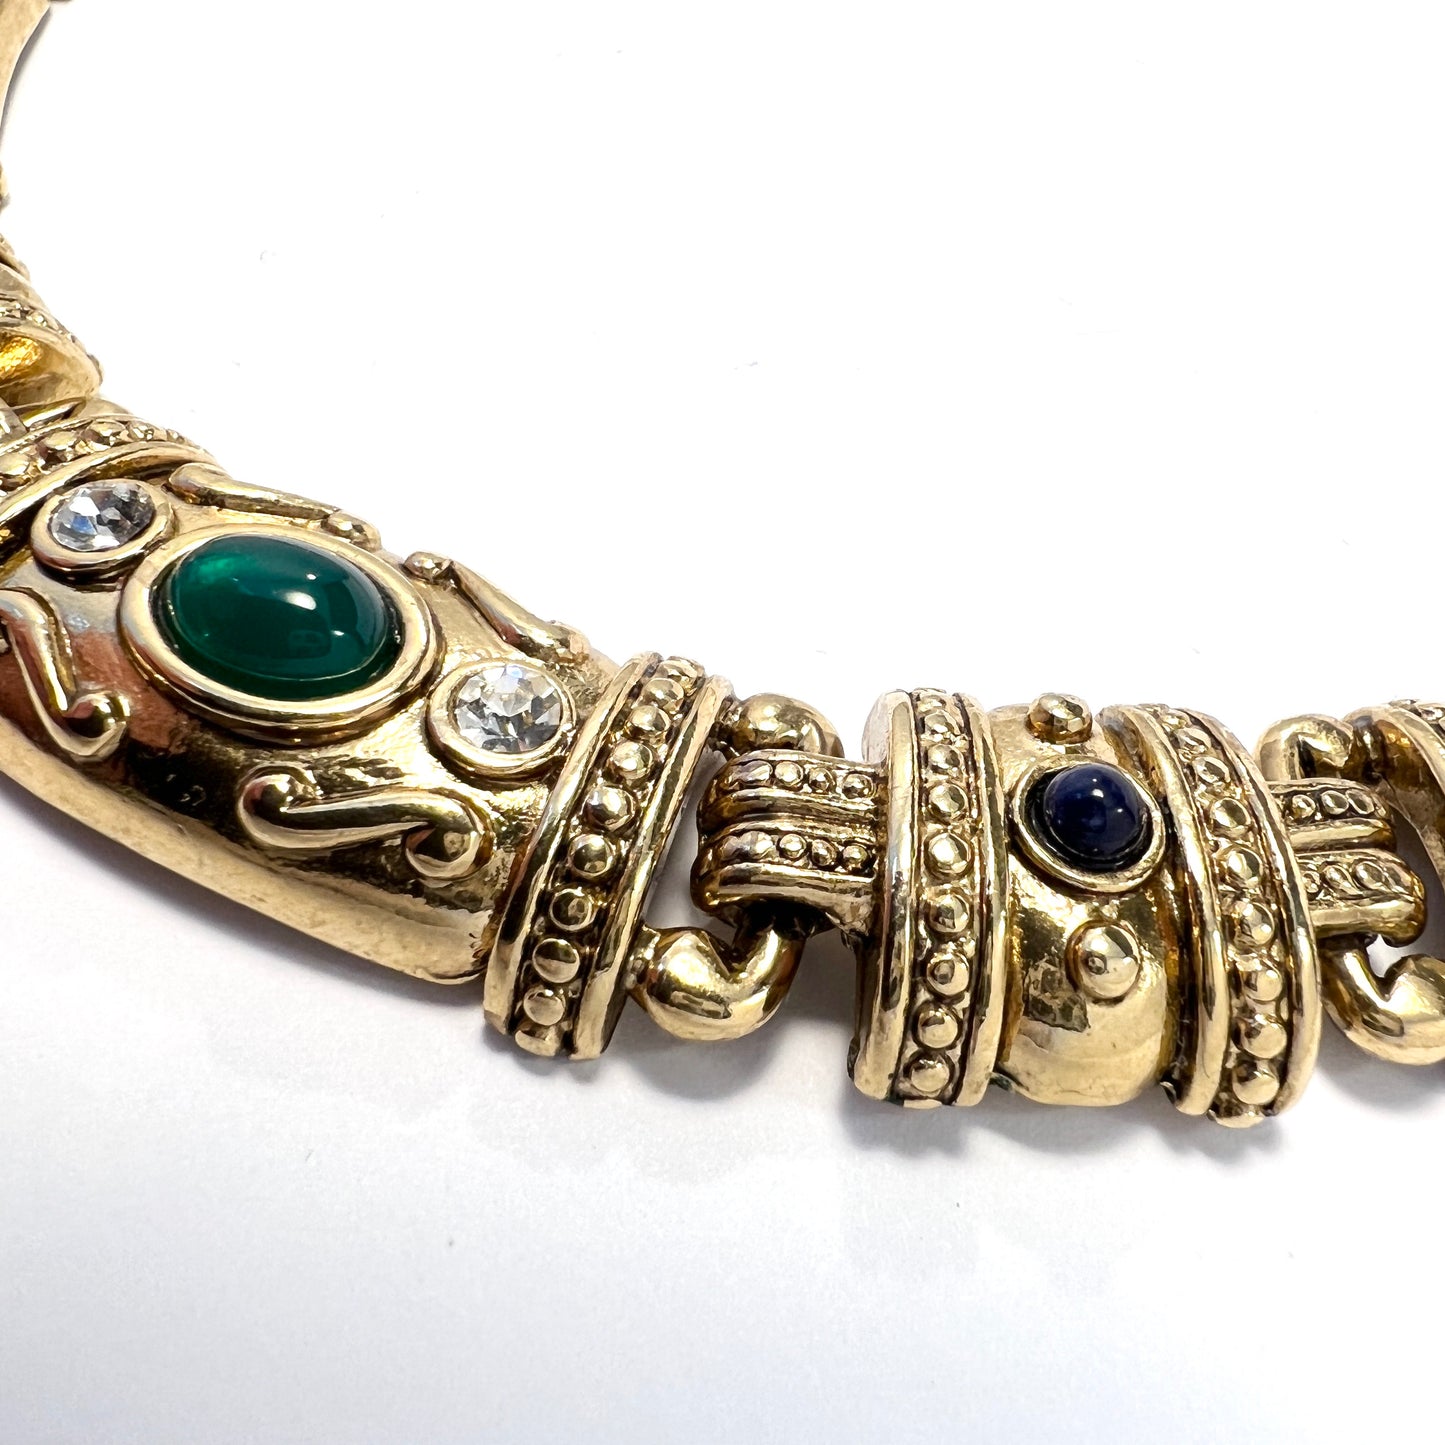 Vintage Massive 3.3oz Costume Jewelry Necklace.